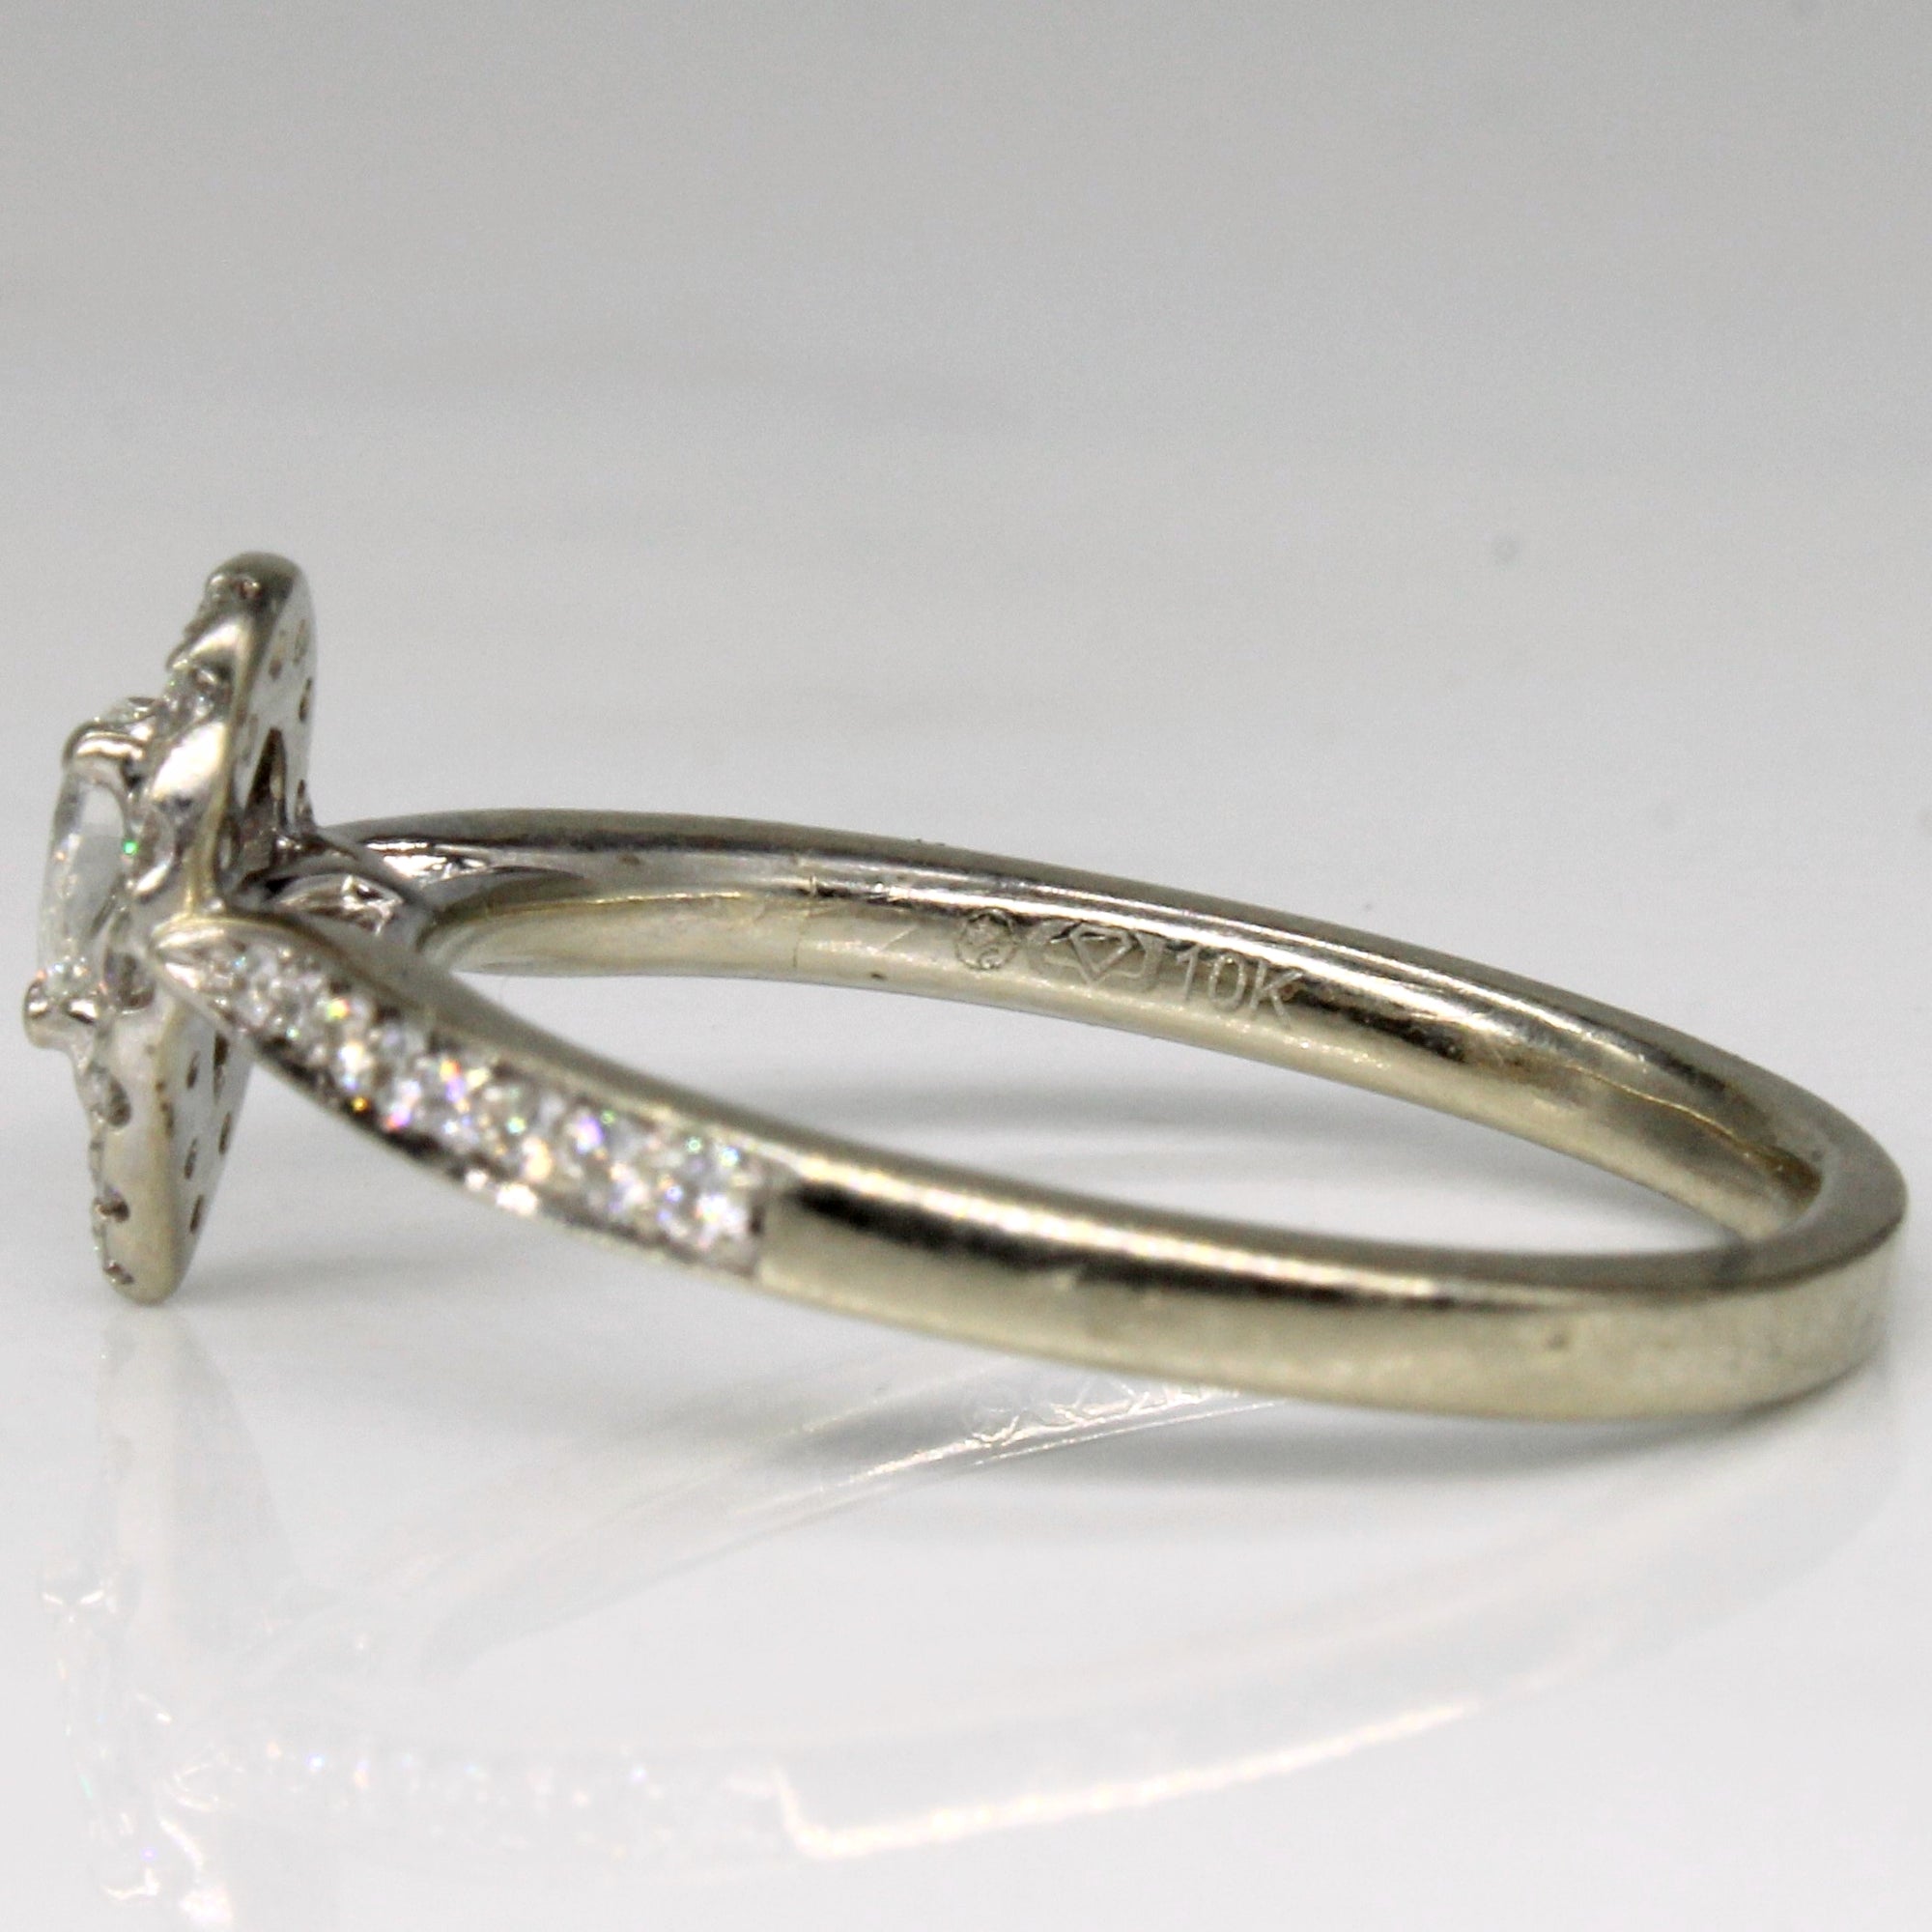 Pear Cut Diamond Engagement Ring | 0.30ctw | SZ 6.75 |